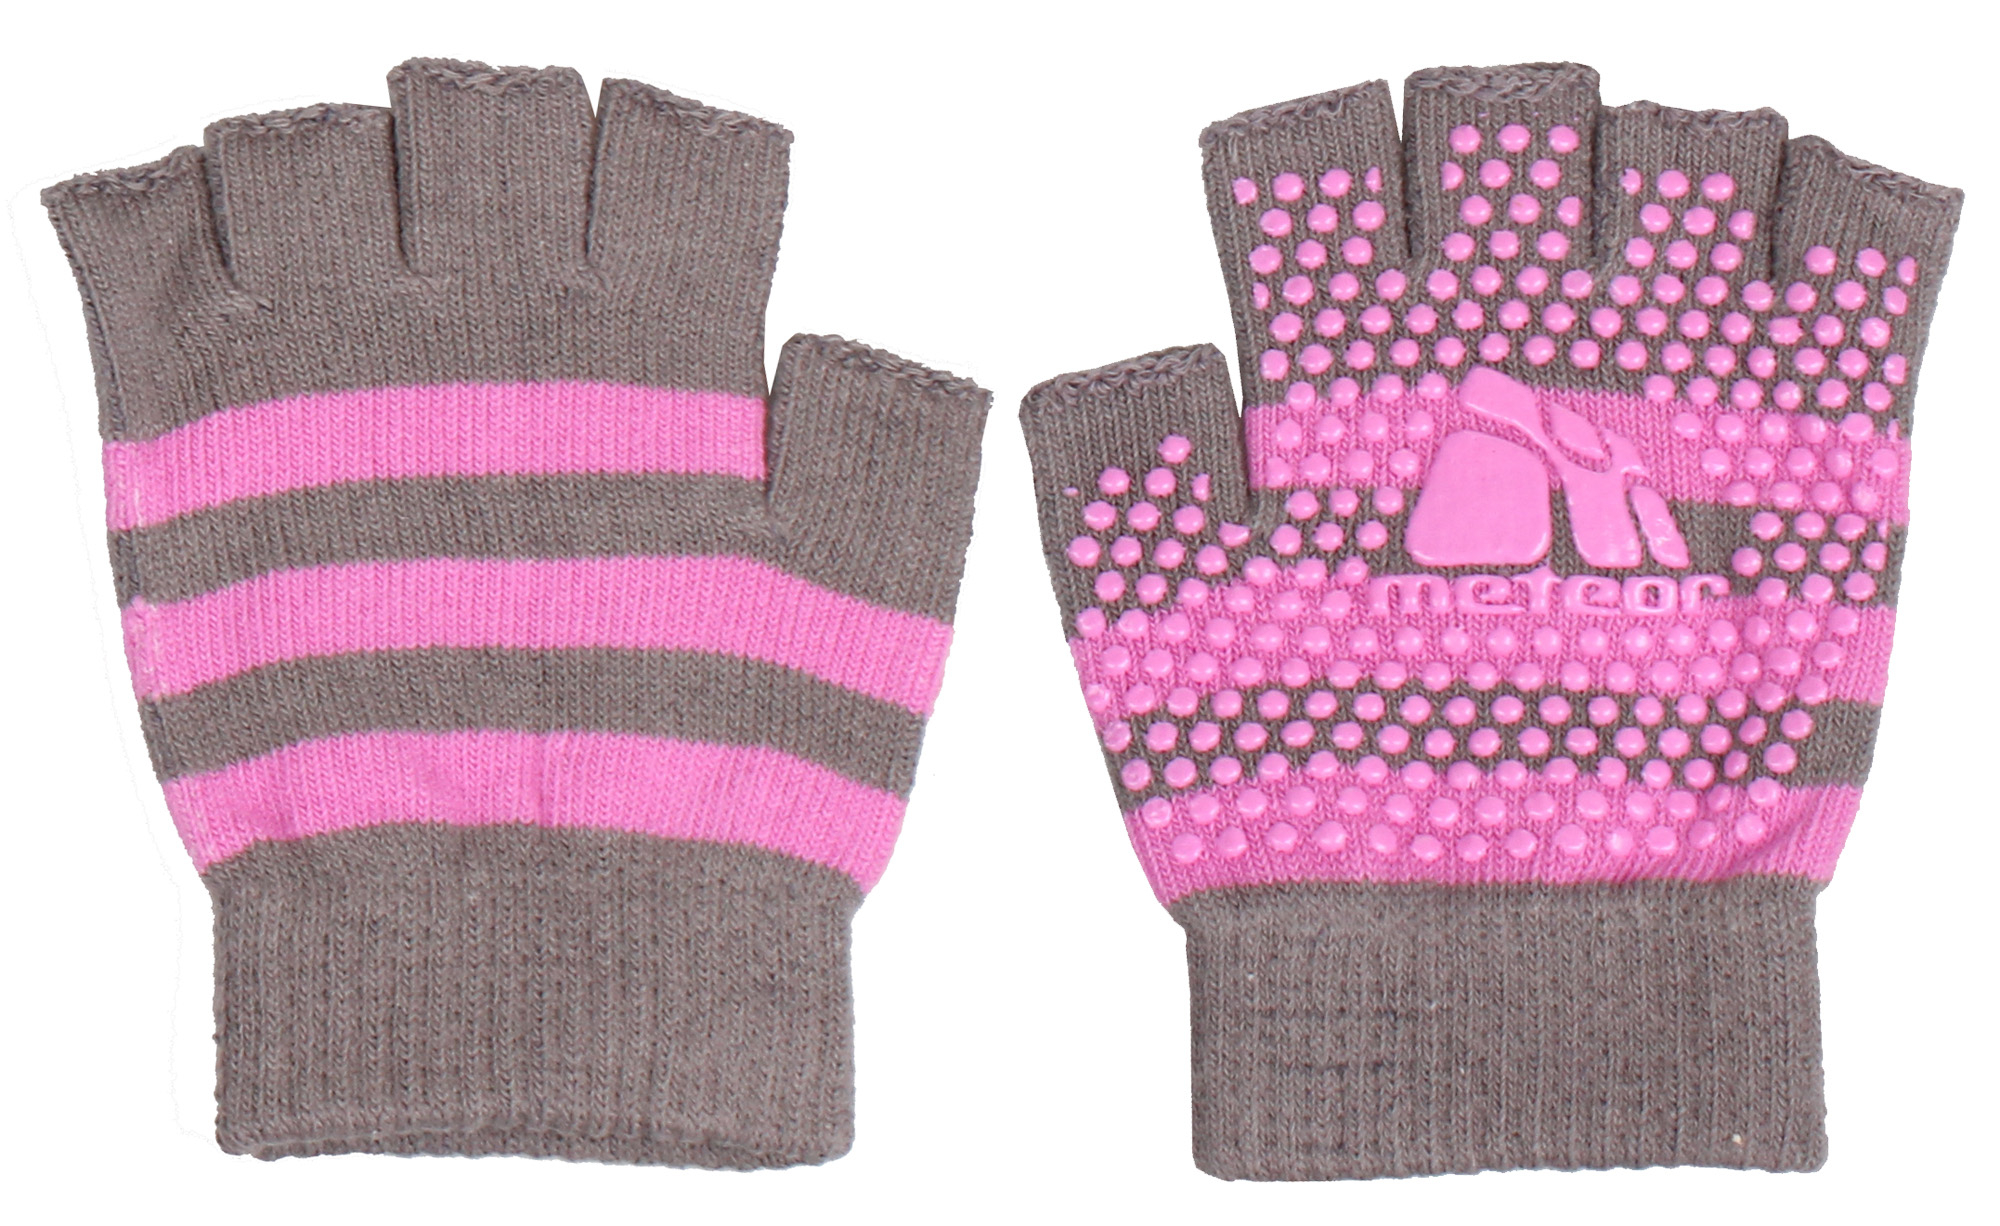 Top 3 Best Crochet Gloves Without Fingers Pattern - mecrochet.com